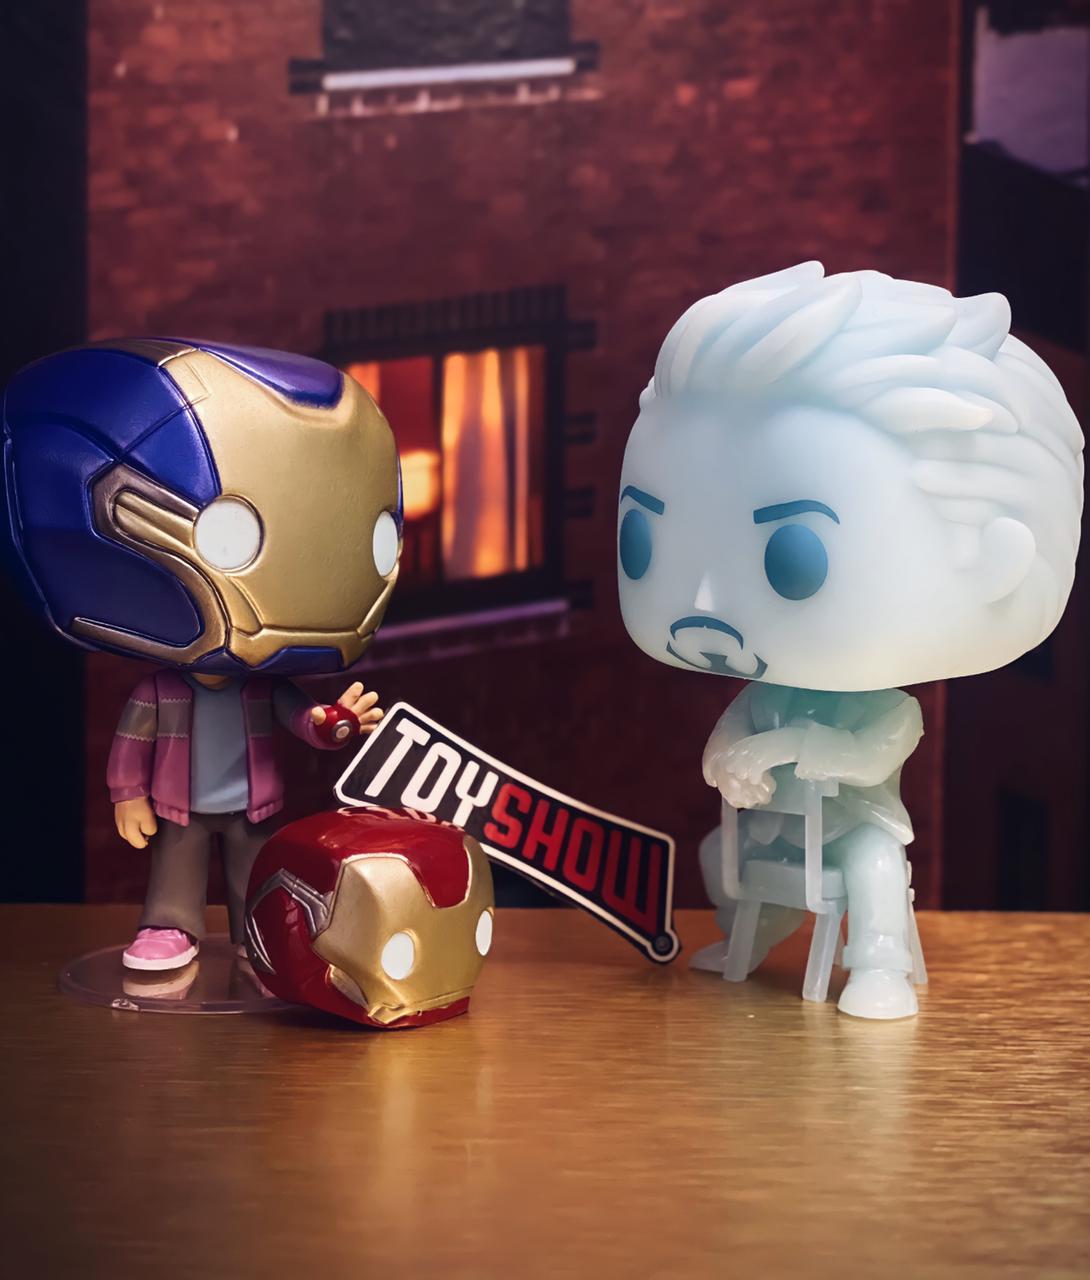 Pack Funko Pop! Homem de Ferro Iron Man Vingadores Ultimato Avengers EndGame: Morgan e Holograma Tony Stark e Capacete (Glow in The Dark) Exclusivo - Marvel #02  - Funko